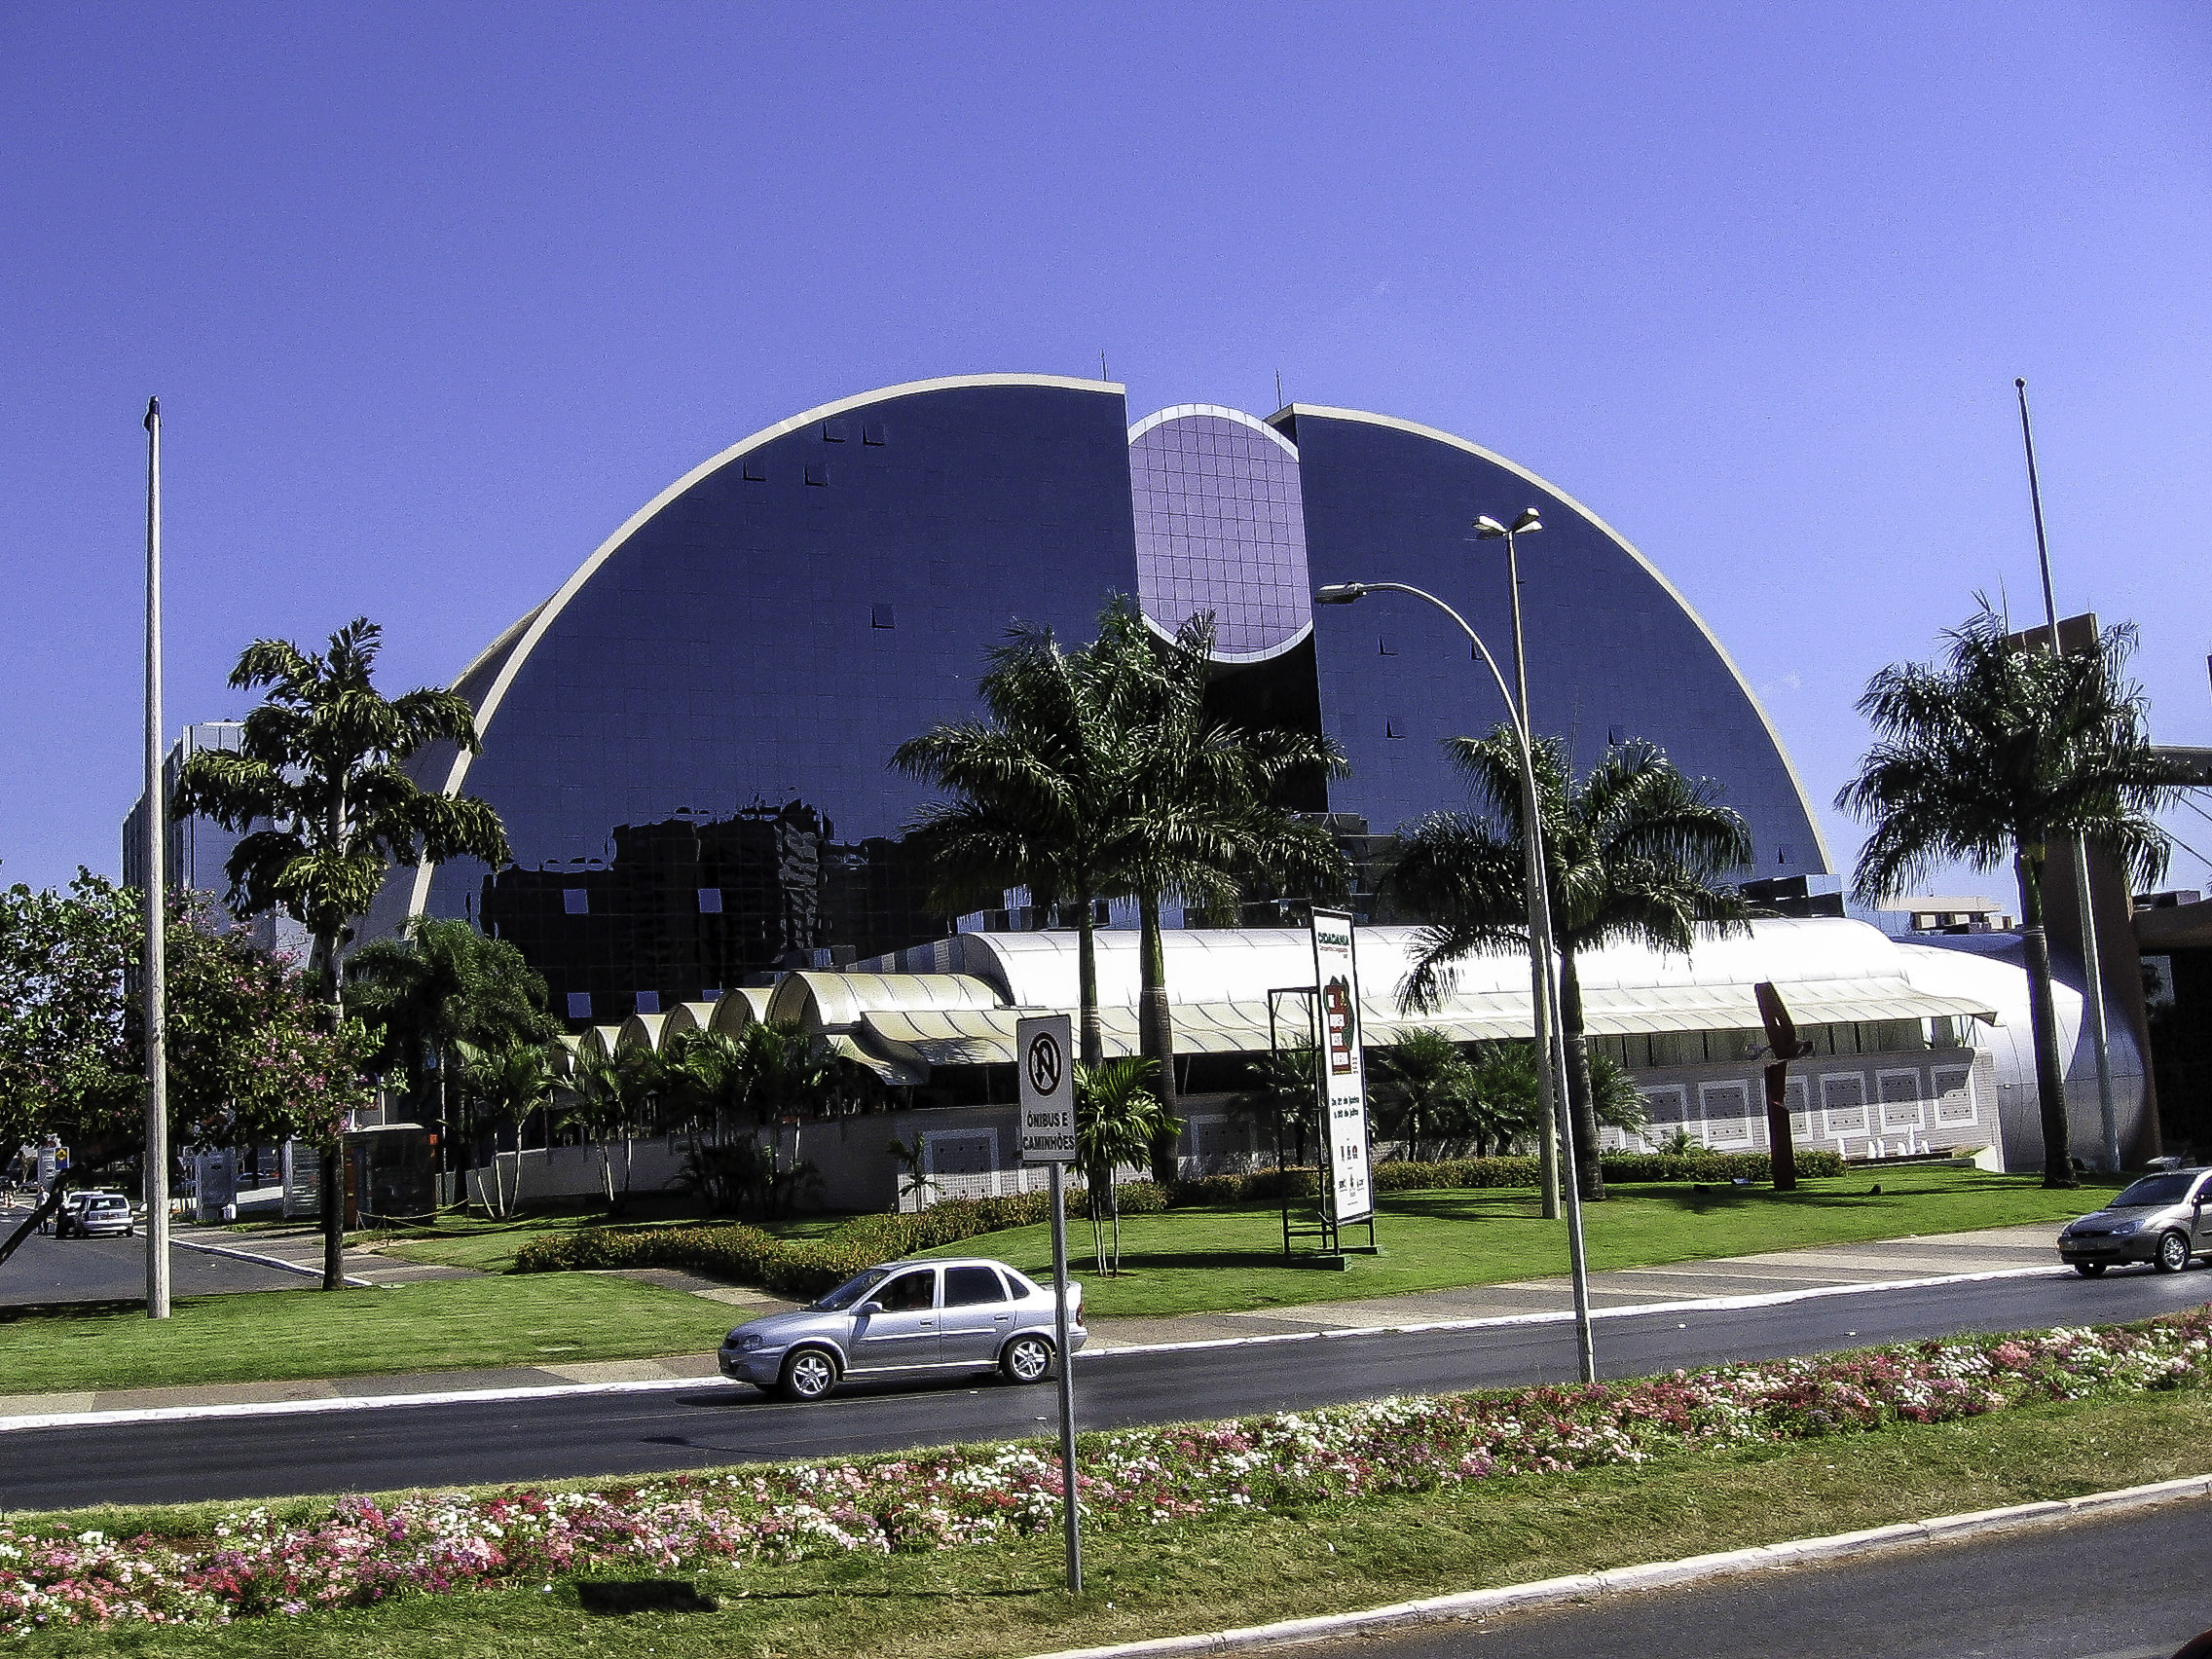 Shopping Center in Brasilia, Brazil image - Free stock photo - Public ...